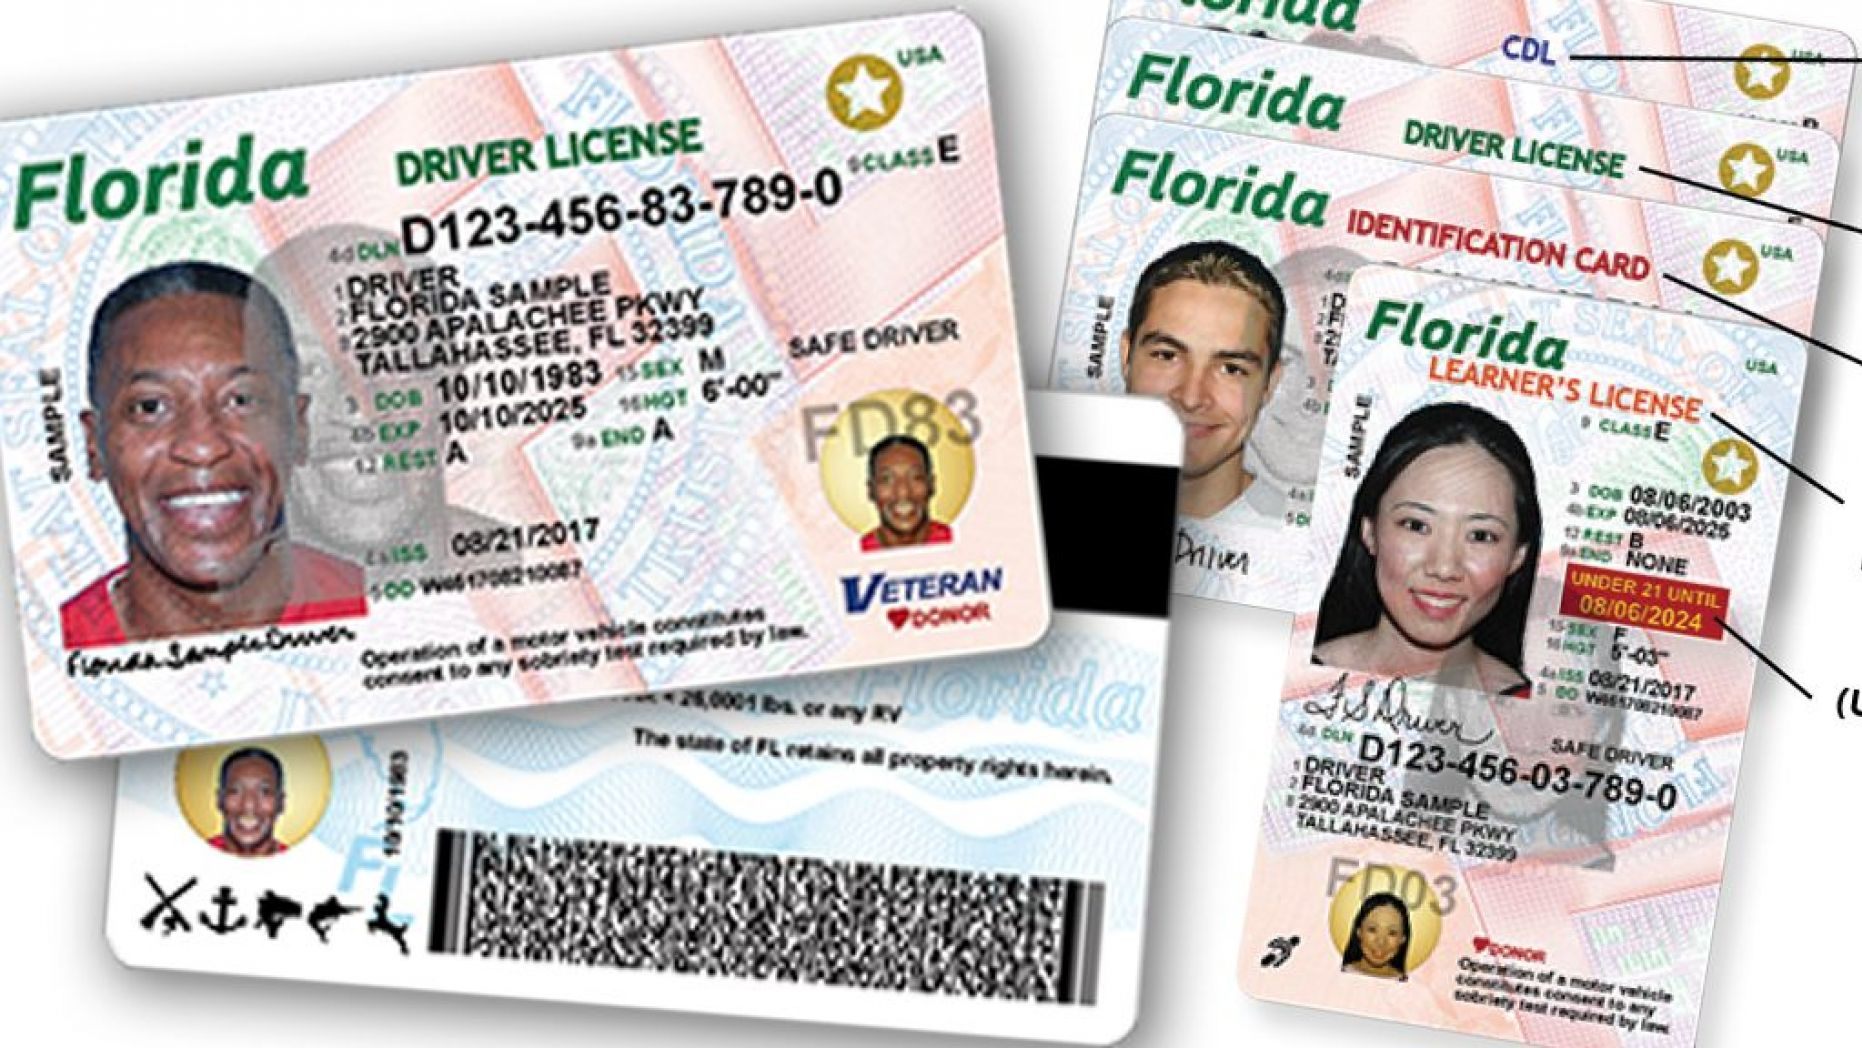 Driver's license and more - Florida drivers license Check Florida